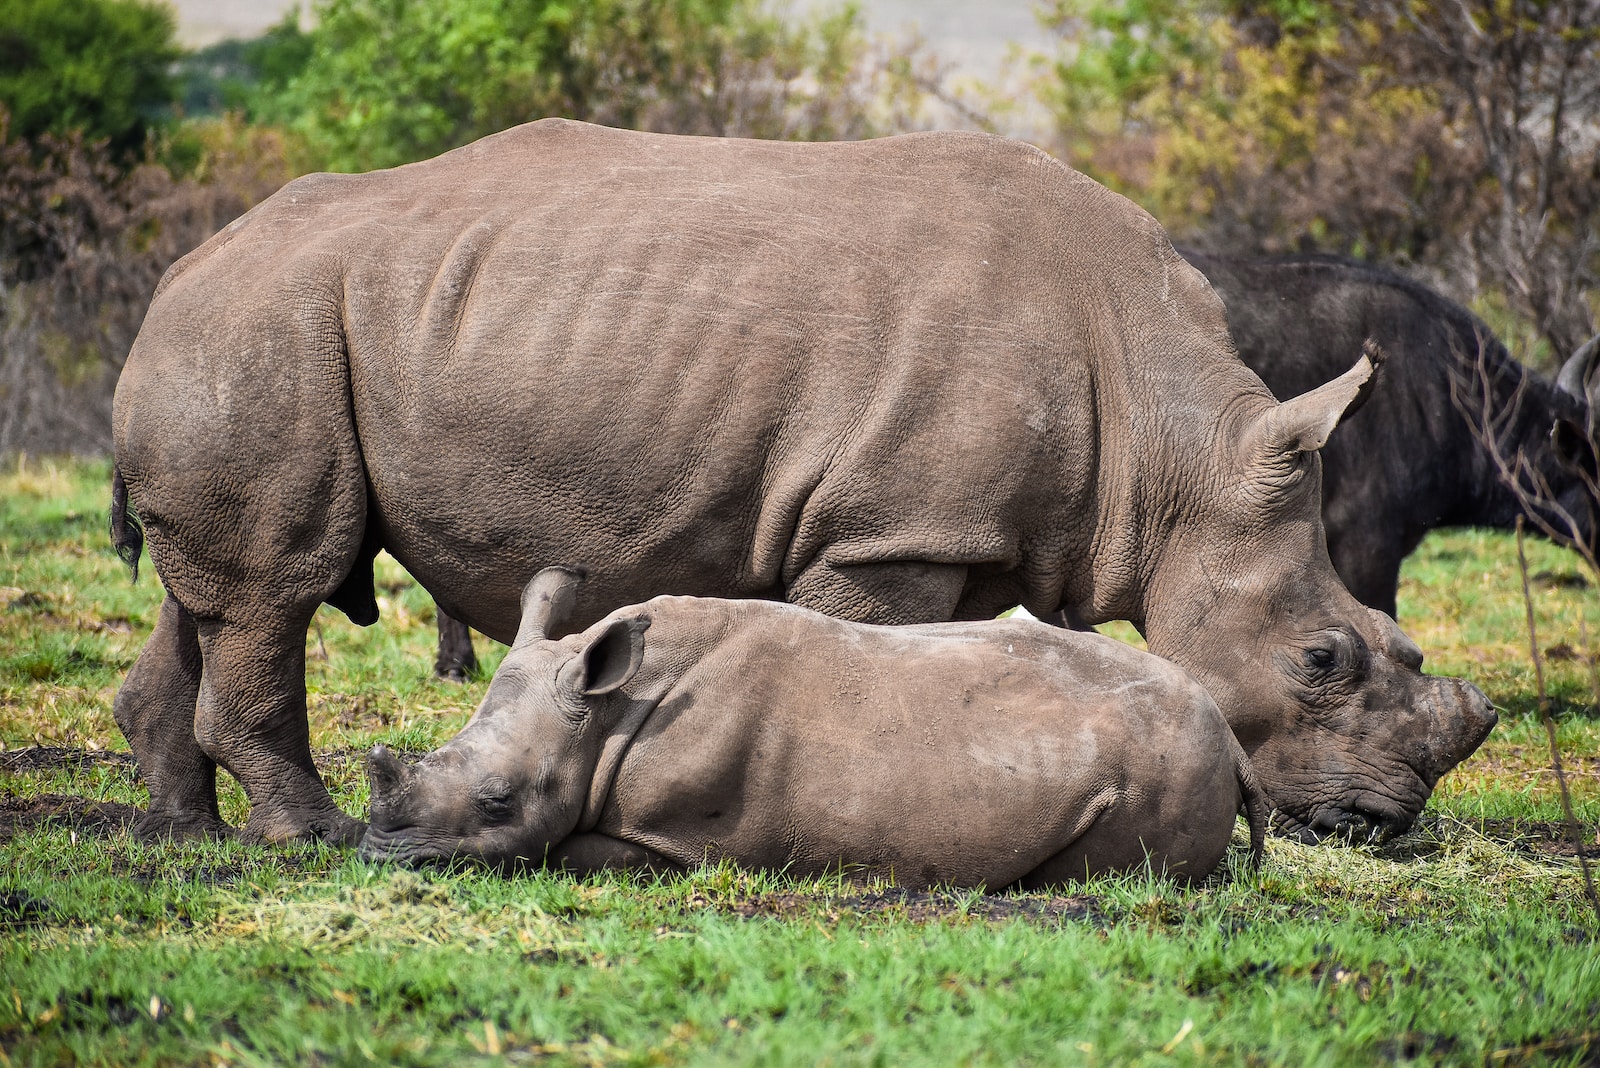 a rhinoceros and a baby rhino grazing in a field